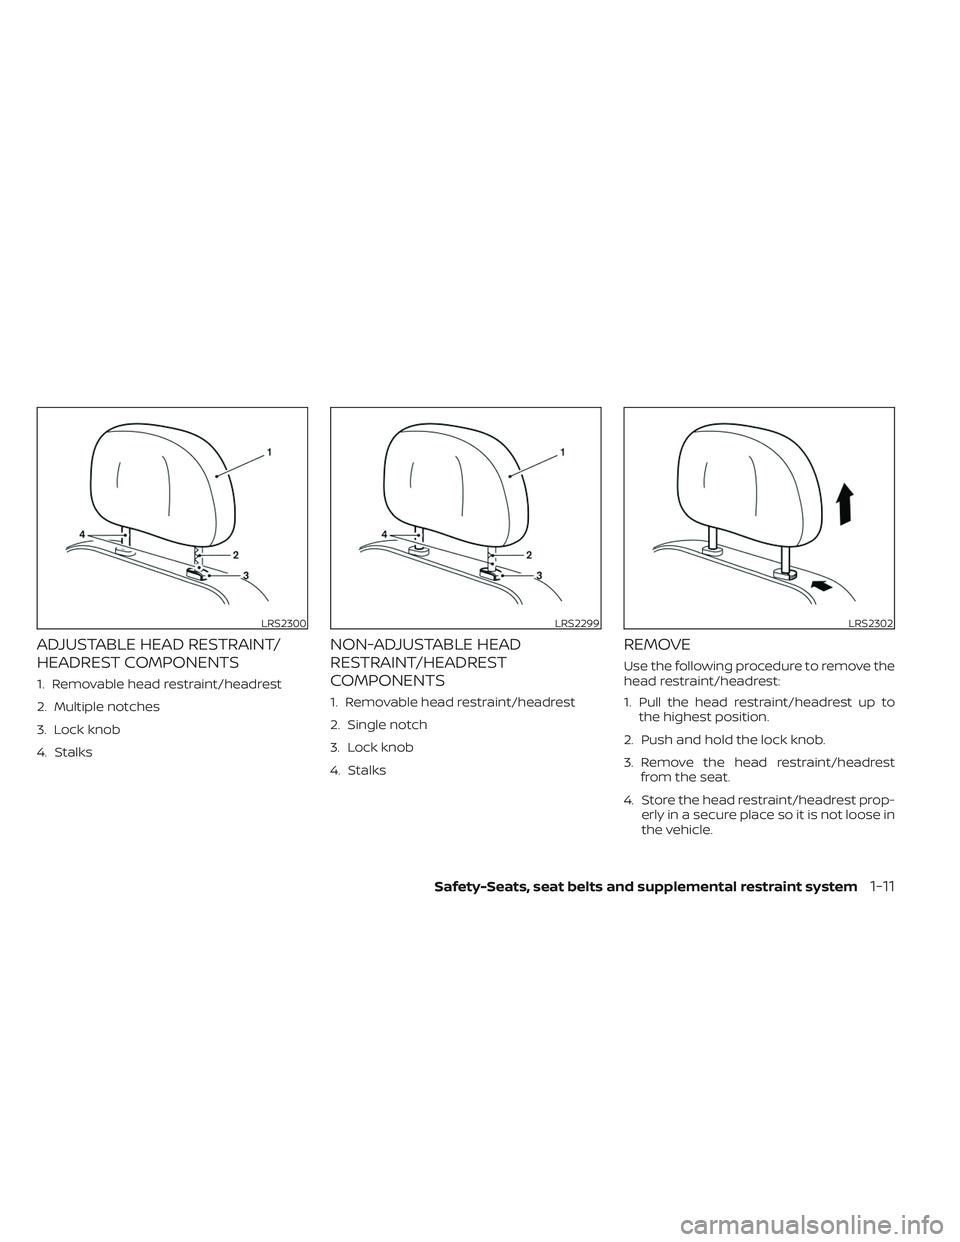 NISSAN FRONTIER 2023 Owners Guide ADJUSTABLE HEAD RESTRAINT/
HEADREST COMPONENTS
1. Removable head restraint/headrest
2. Multiple notches
3. Lock knob
4. Stalks
NON-ADJUSTABLE HEAD
RESTRAINT/HEADREST
COMPONENTS
1. Removable head restr